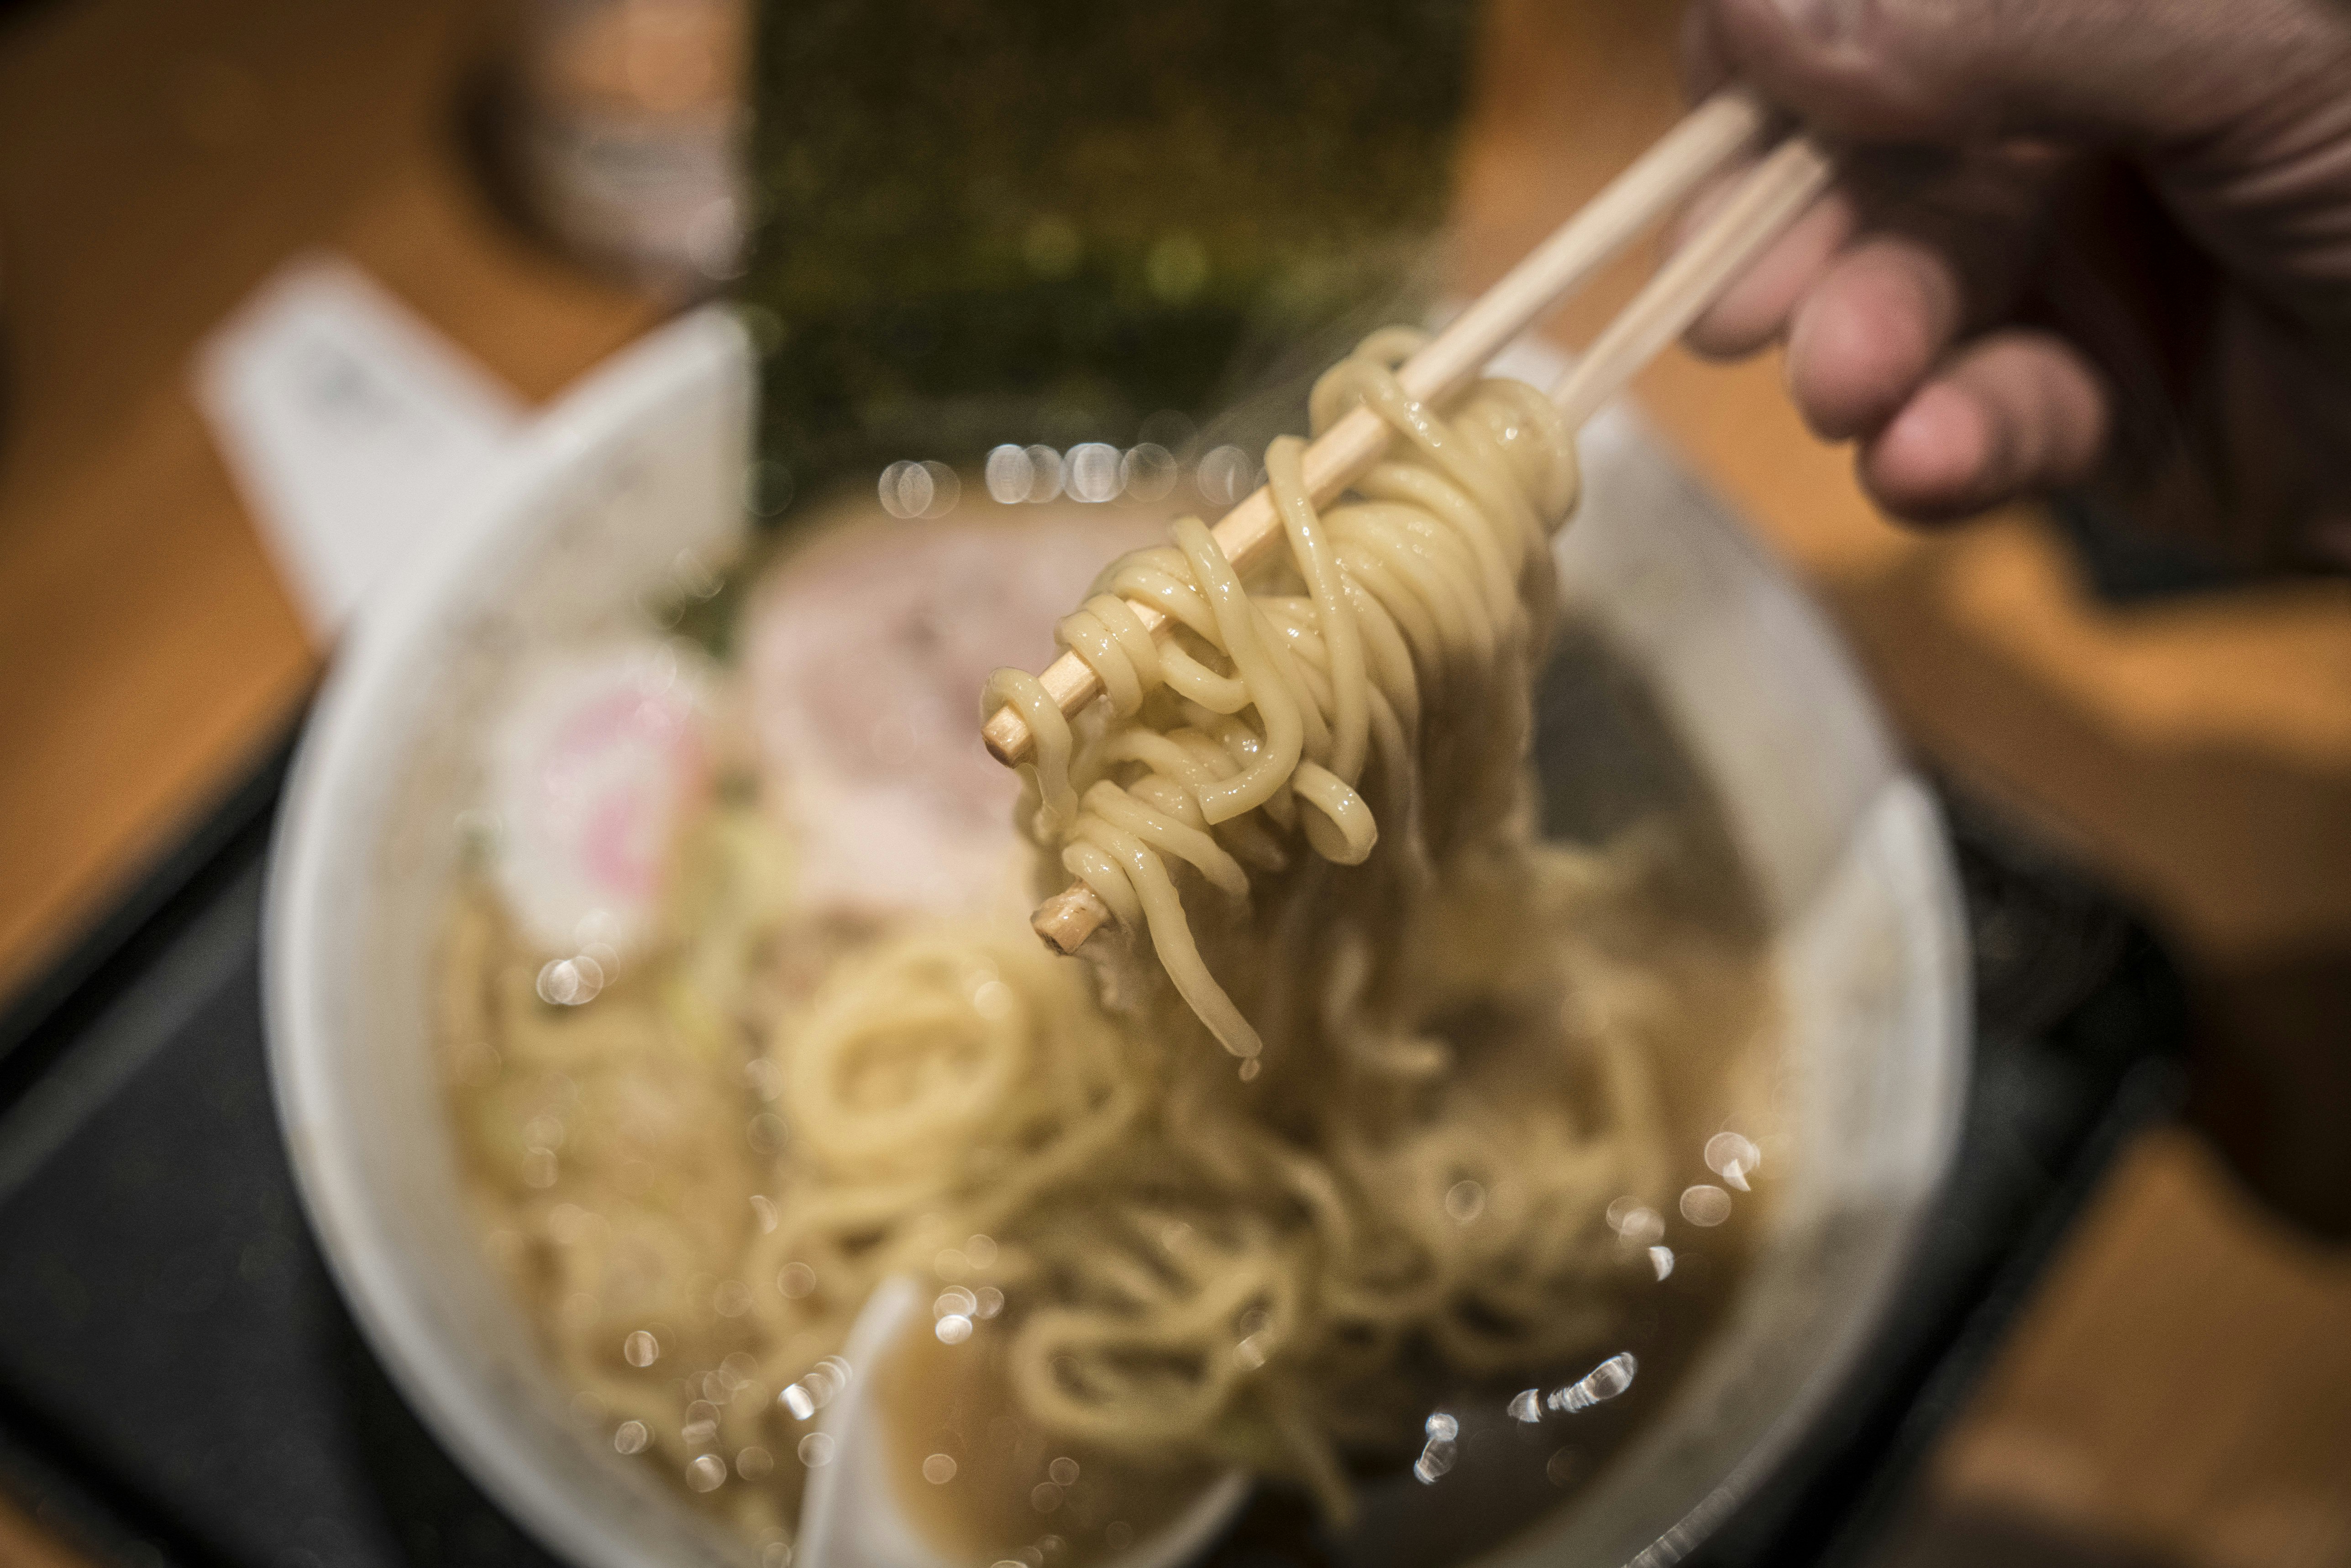 A pair of chopsticks lift a mouthful of noodles from a ramen bowl